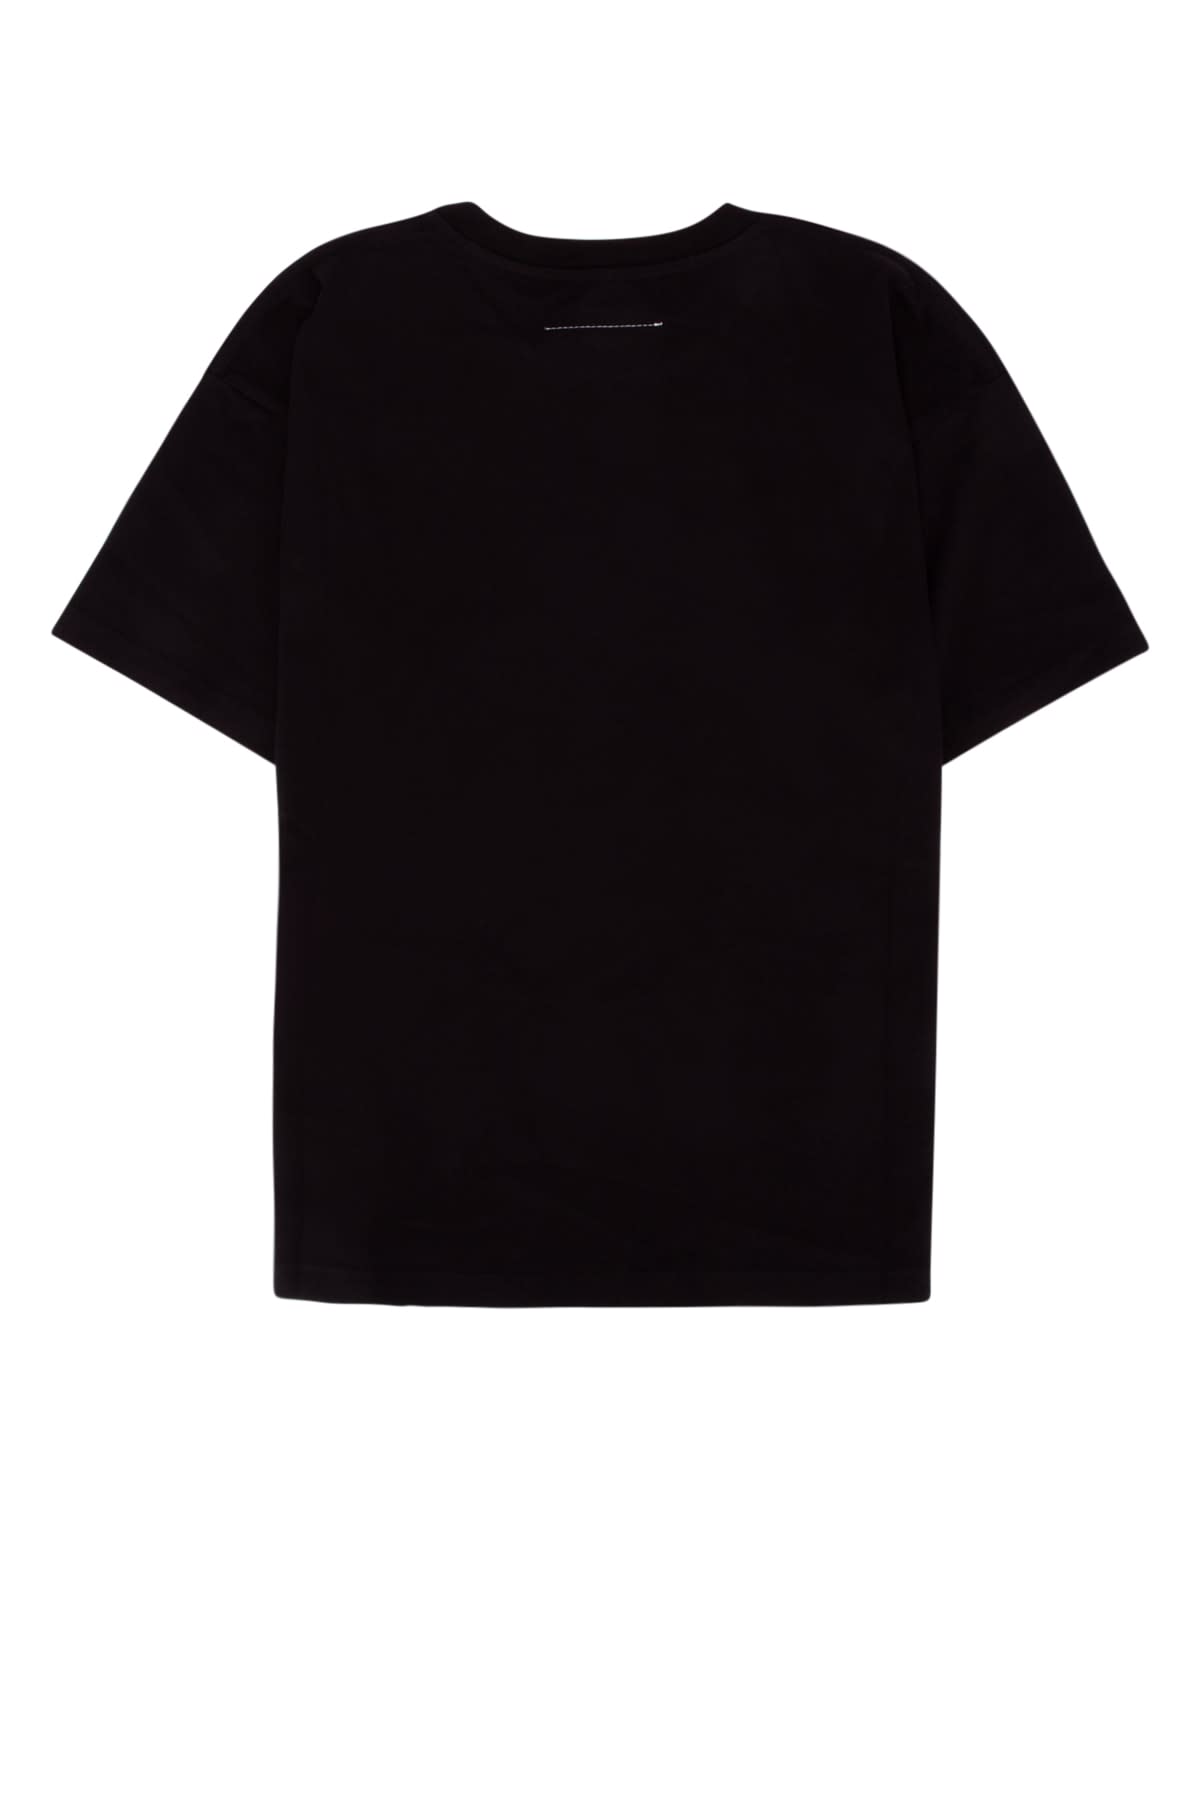 Mm6 Maison Margiela Kids' T-shirt In Black